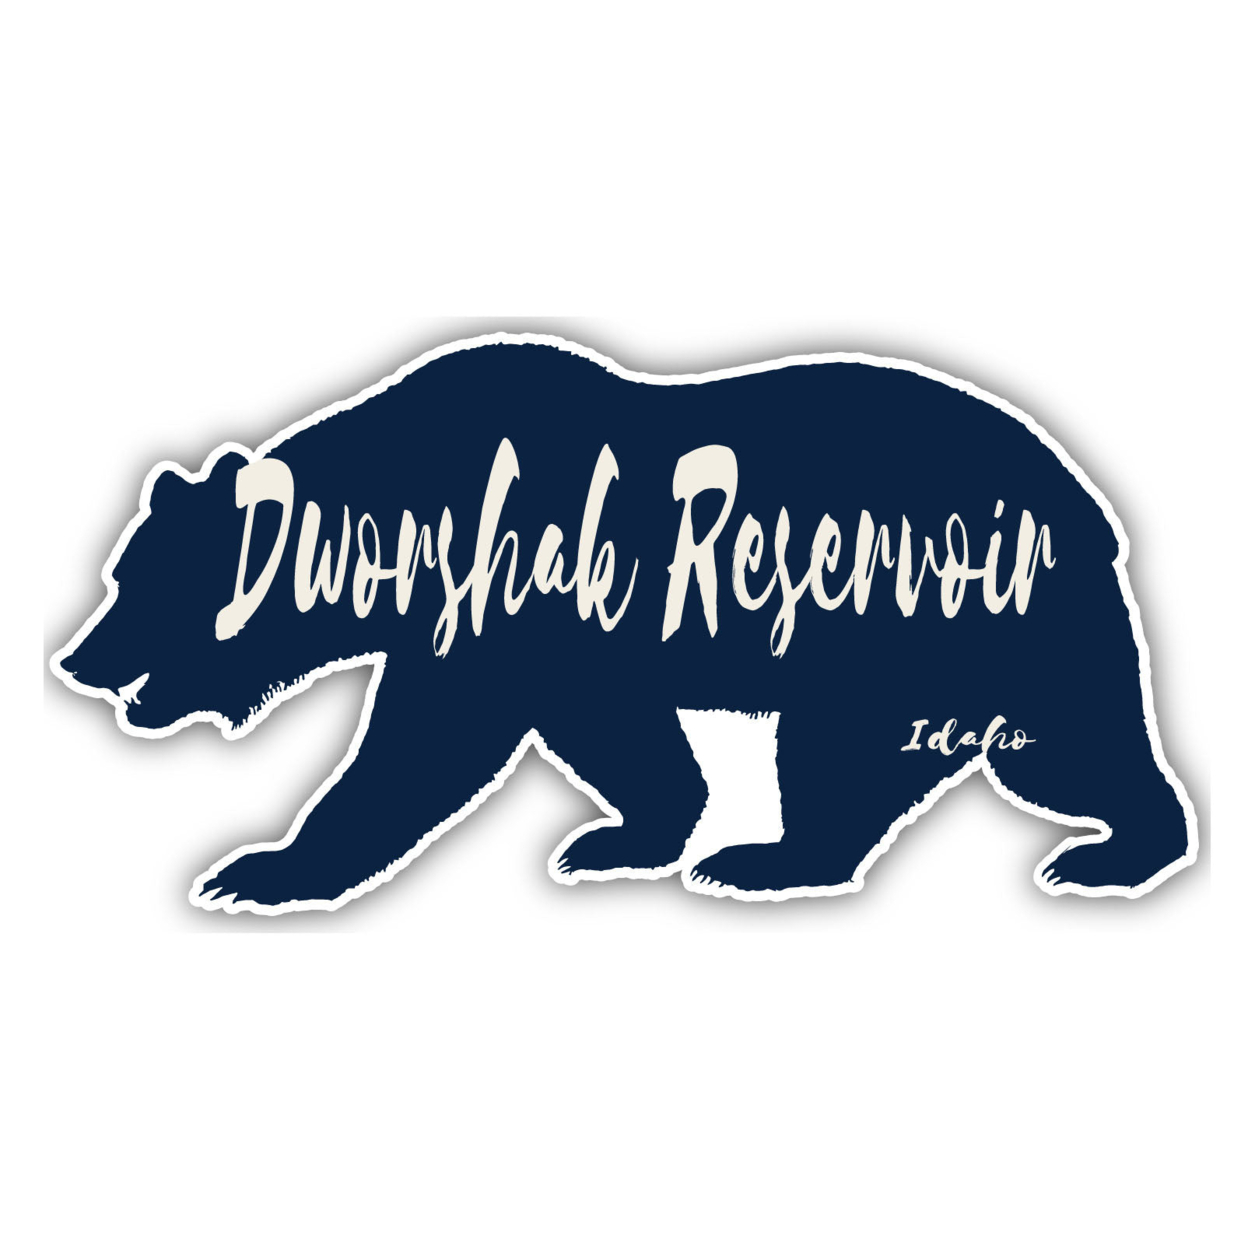 Dworshak Reservoir Idaho Souvenir Decorative Stickers (Choose Theme And Size) - Single Unit, 6-Inch, Camp Life